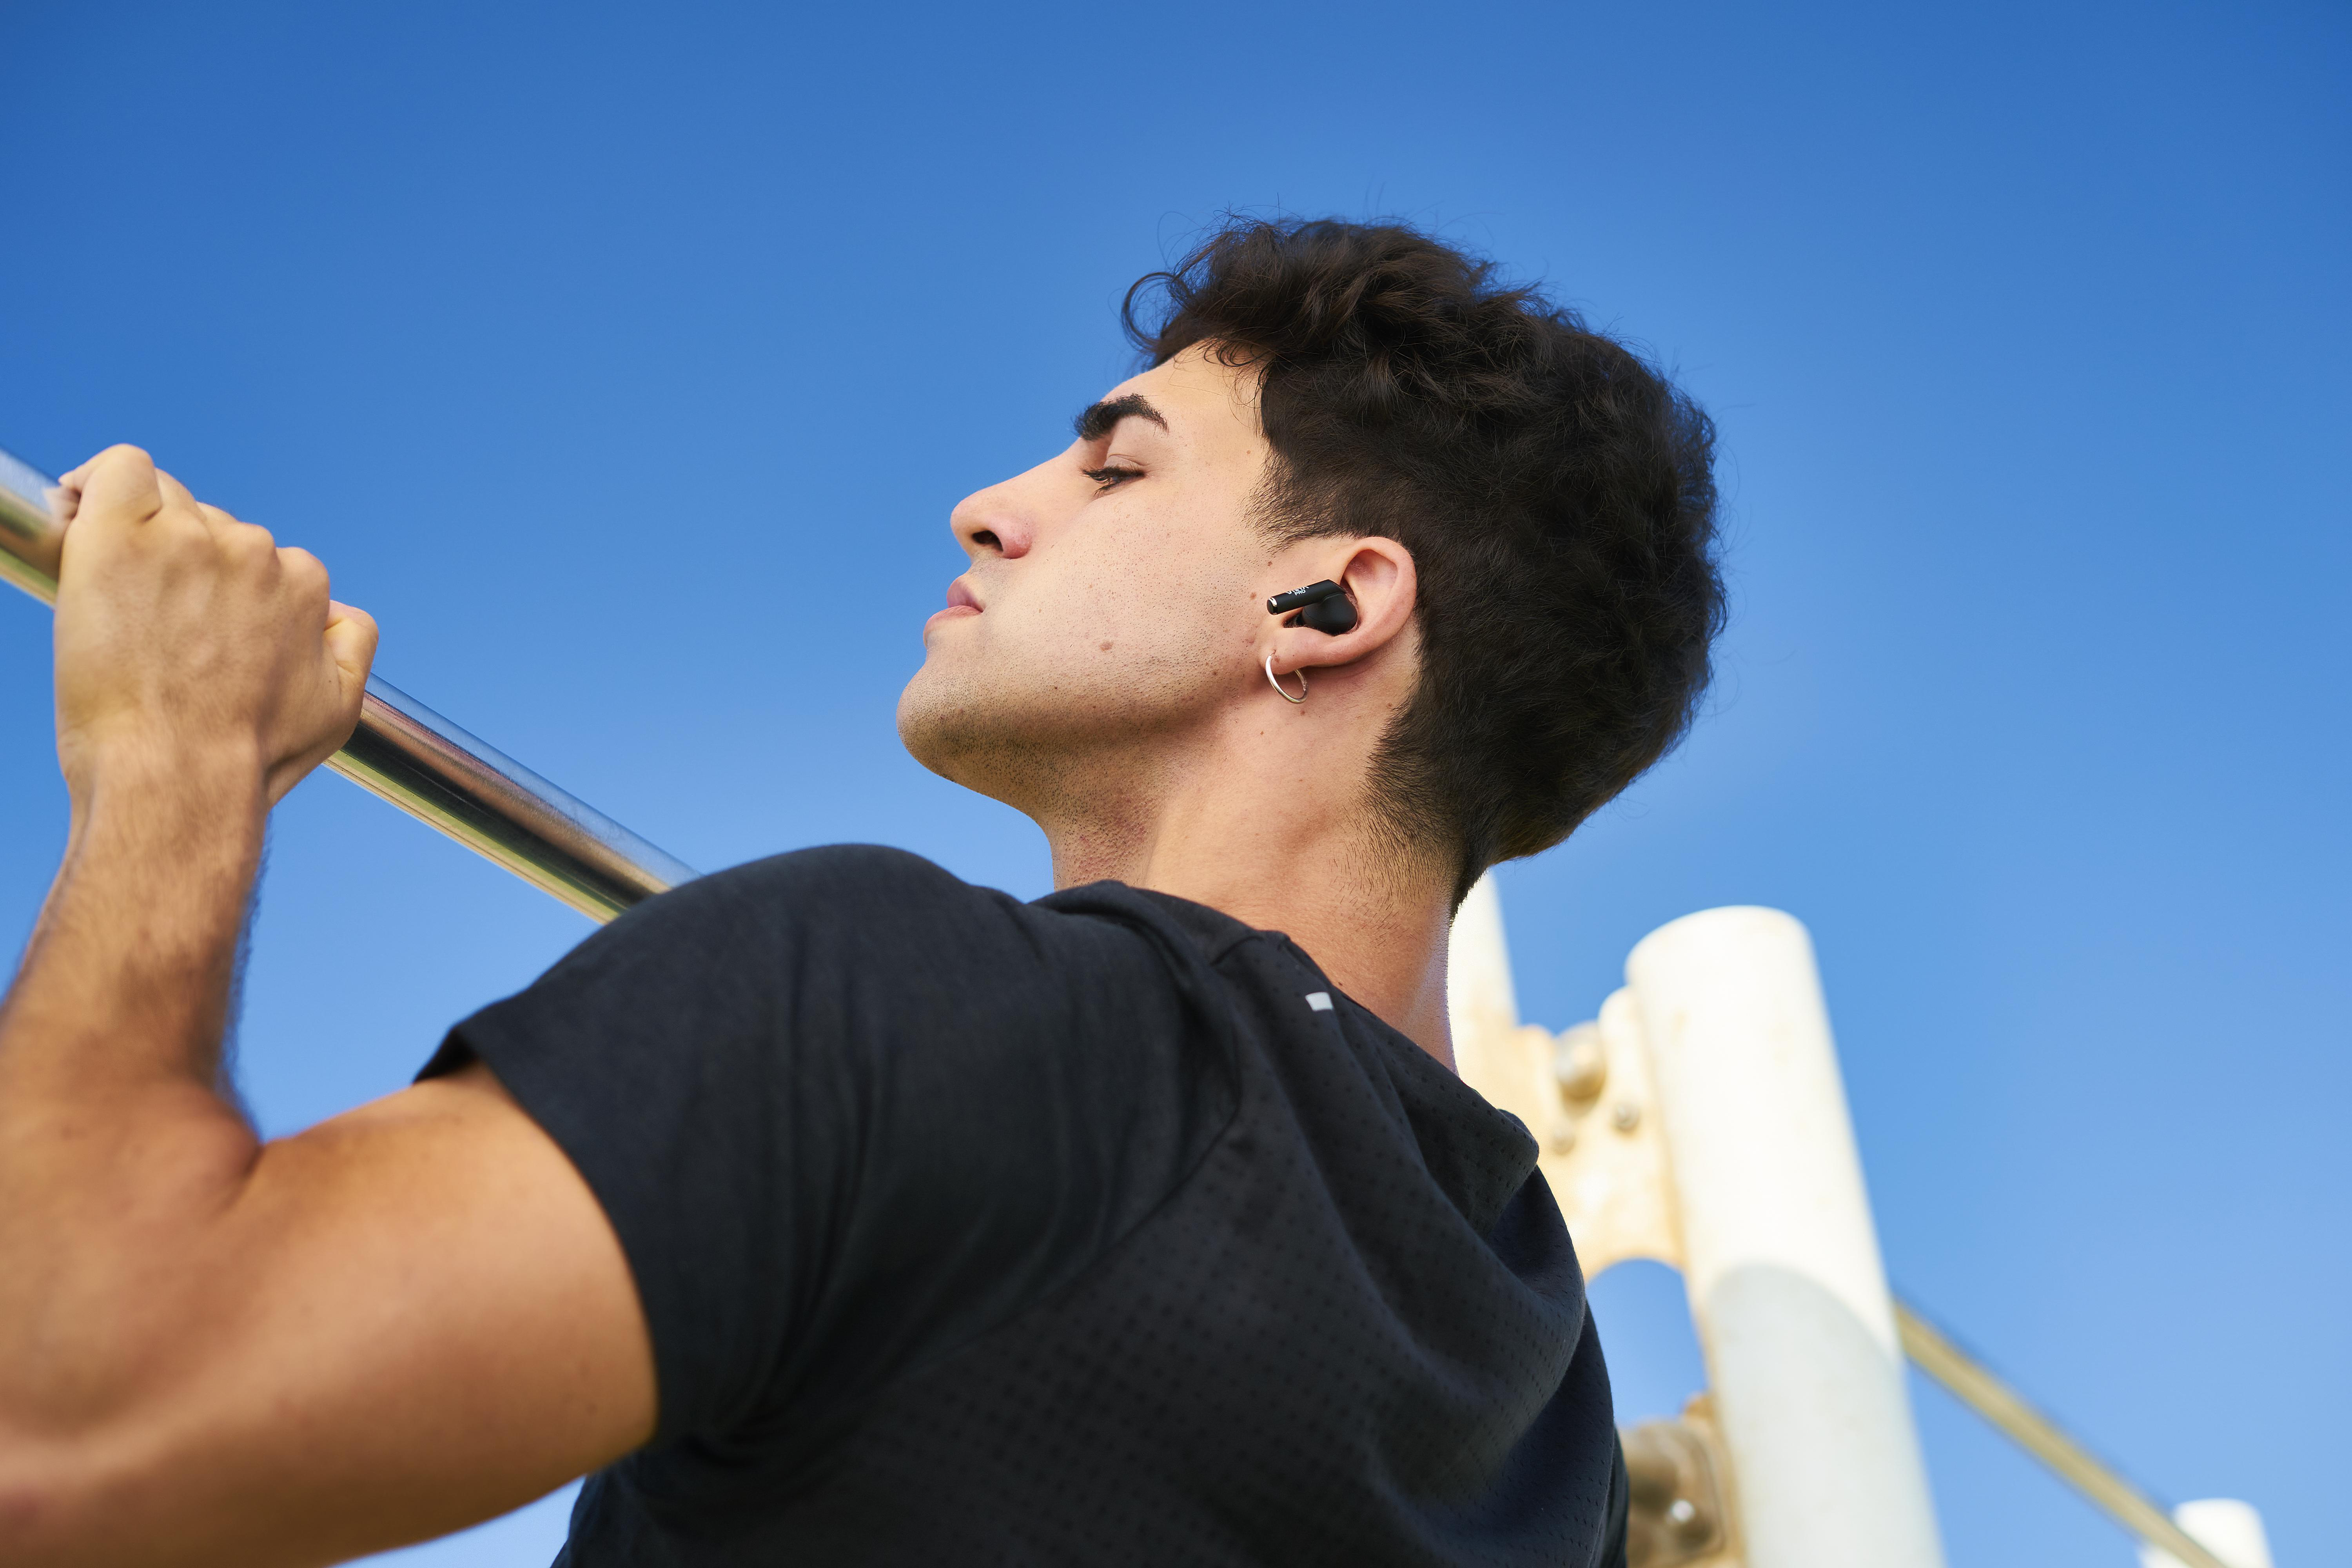 In-ear Schwarz Wireless, Fade Bluetooth True Anc Kopfhörer VIETA